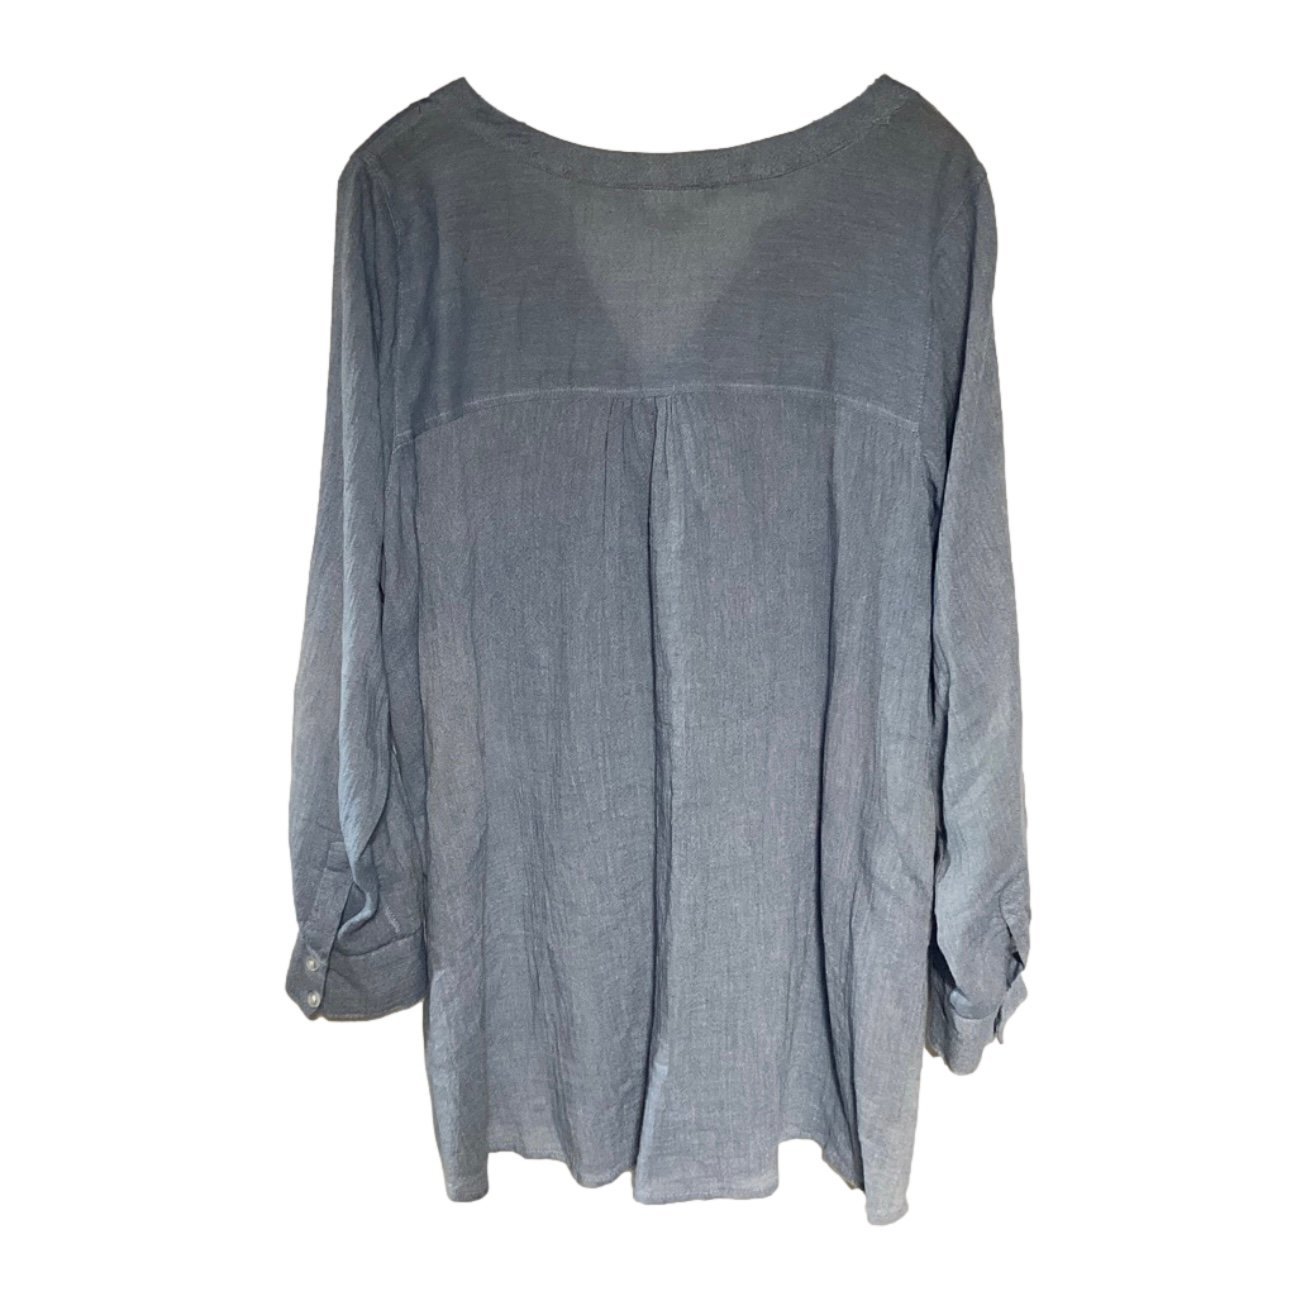 High quality Avenue blue button down shirt long sleeves lightweight Size 18/20 HehsQ8IJr online store